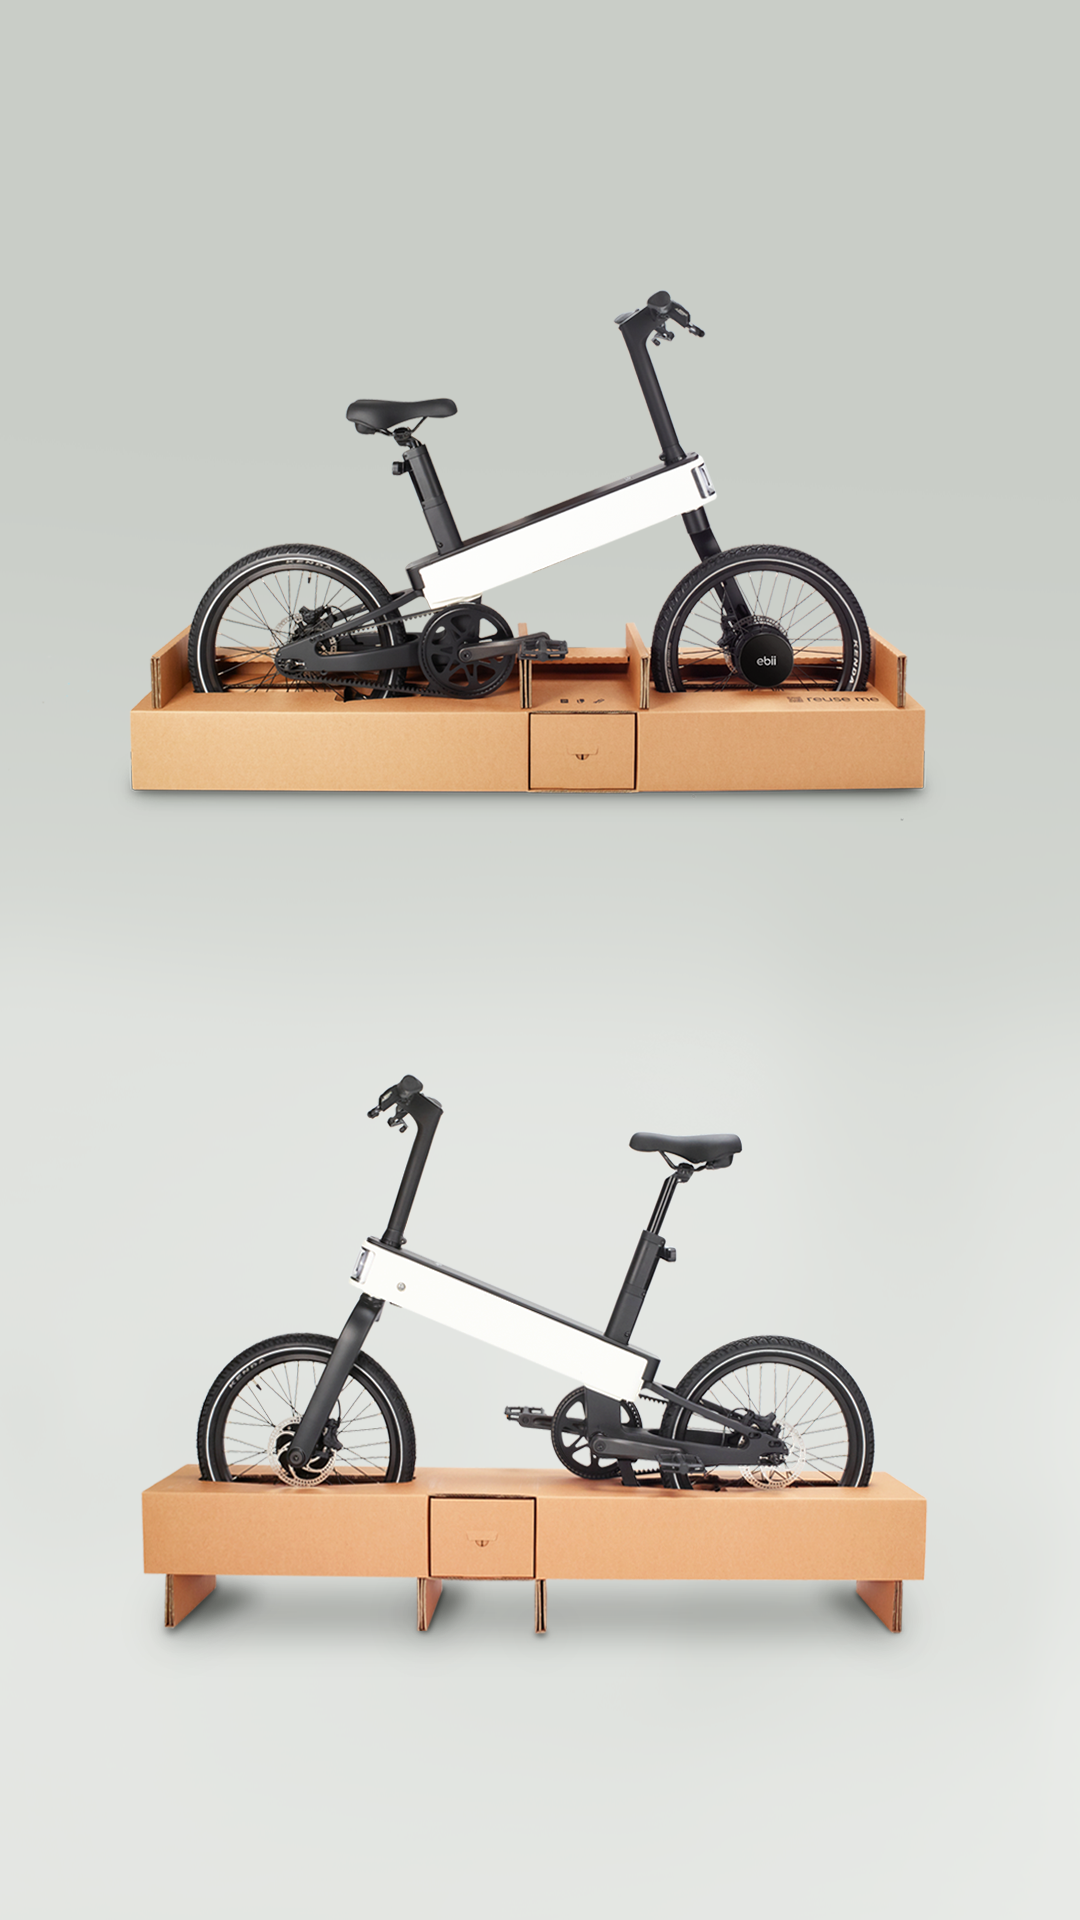 Acer ebii Smart Bike ECO-Friendly Packaging